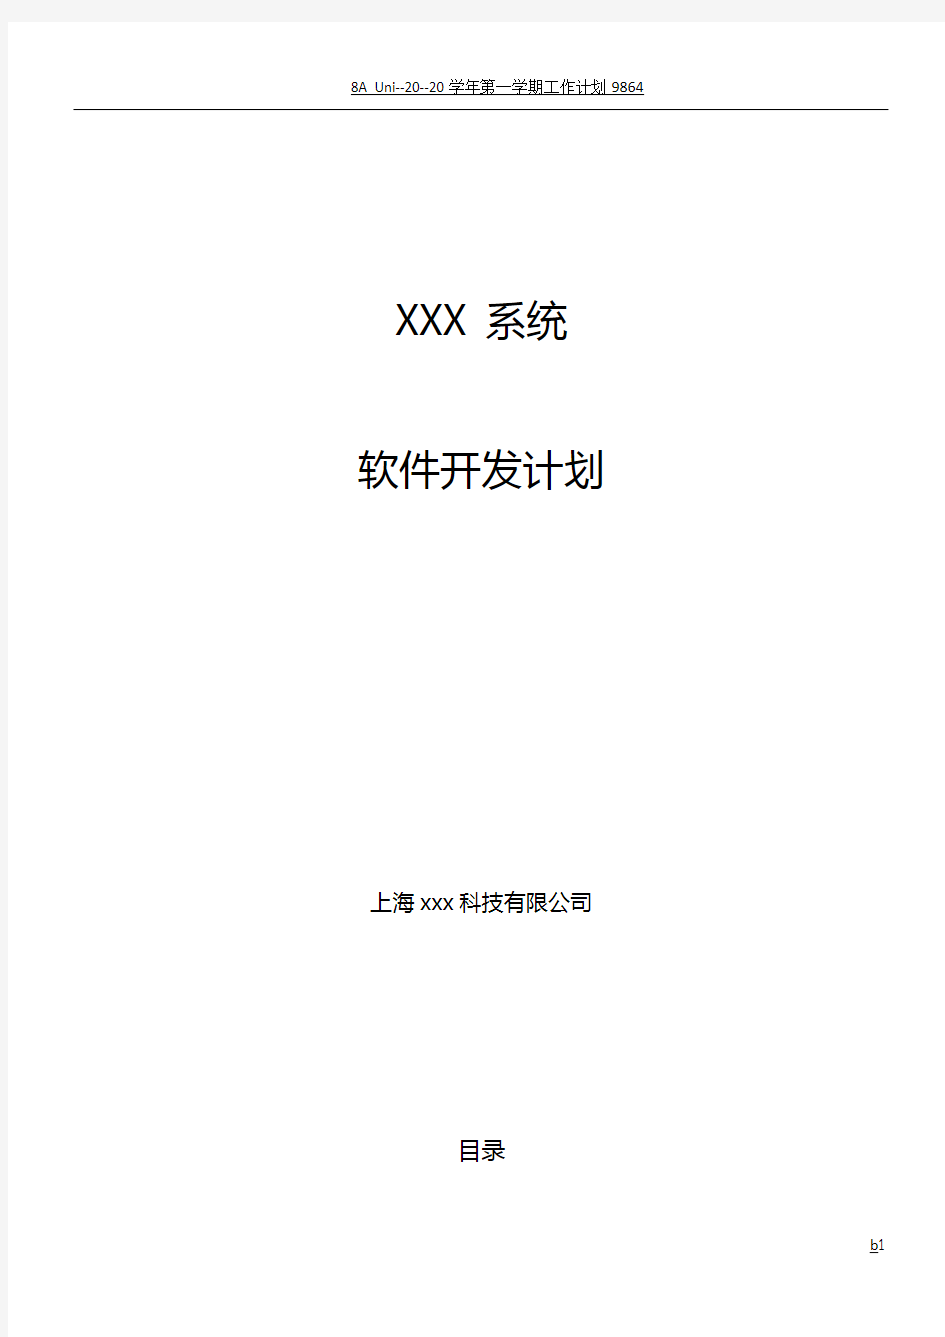 xxx系统--软件项目开发计划